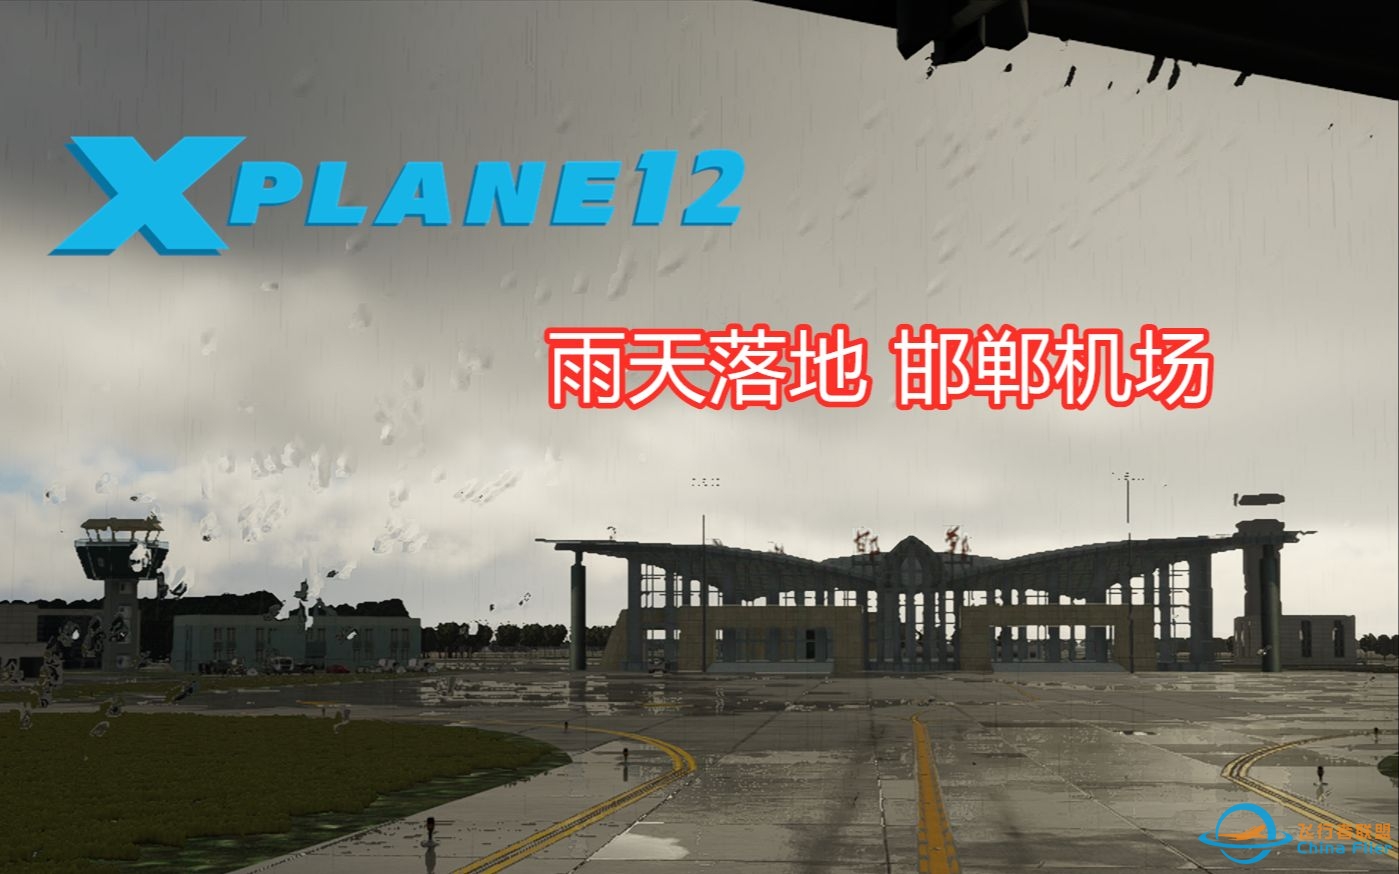 【Xplane 12】东方航空737-800 雨夜降落邯郸机场-1950 